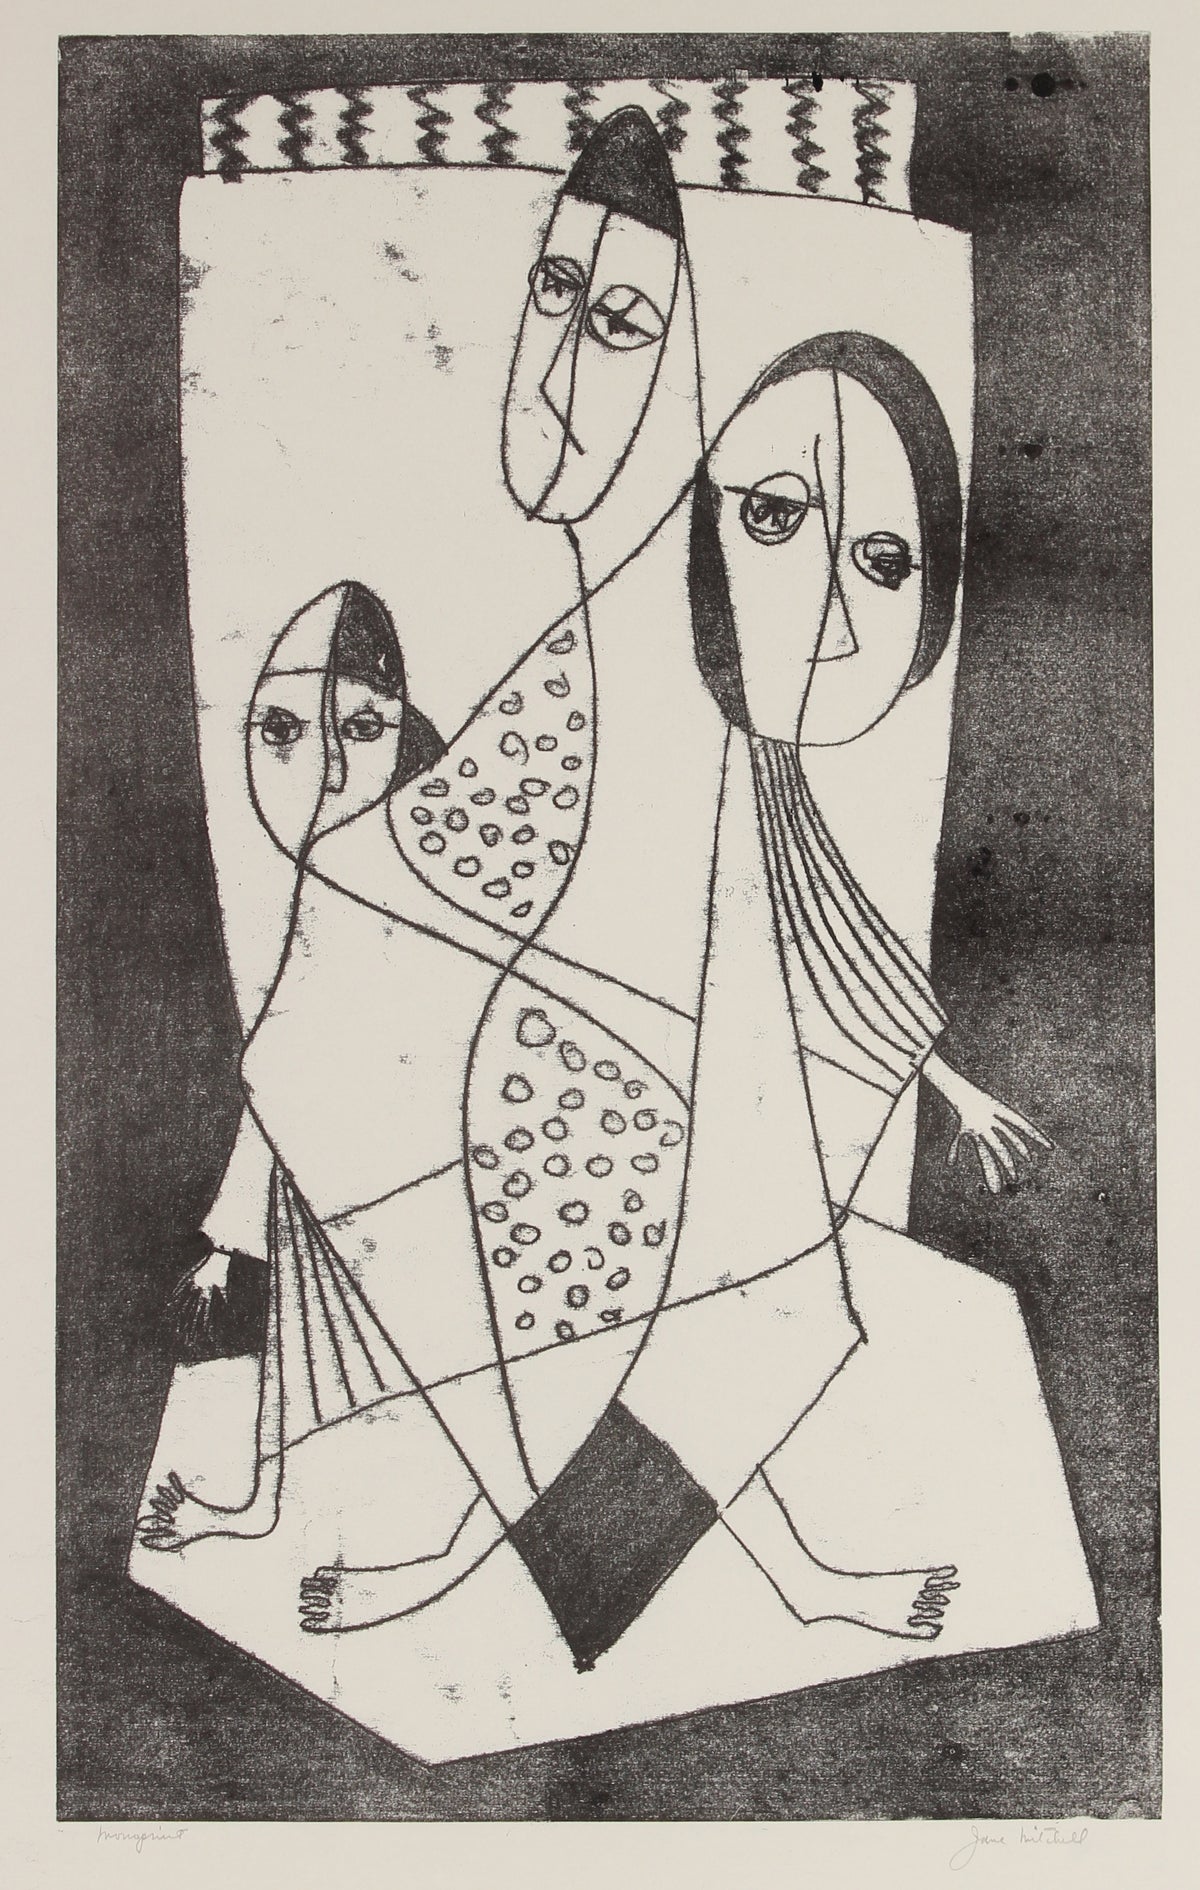 Three Abstracted Figures&lt;br&gt;1970 Monotype&lt;br&gt;&lt;br&gt;#91512